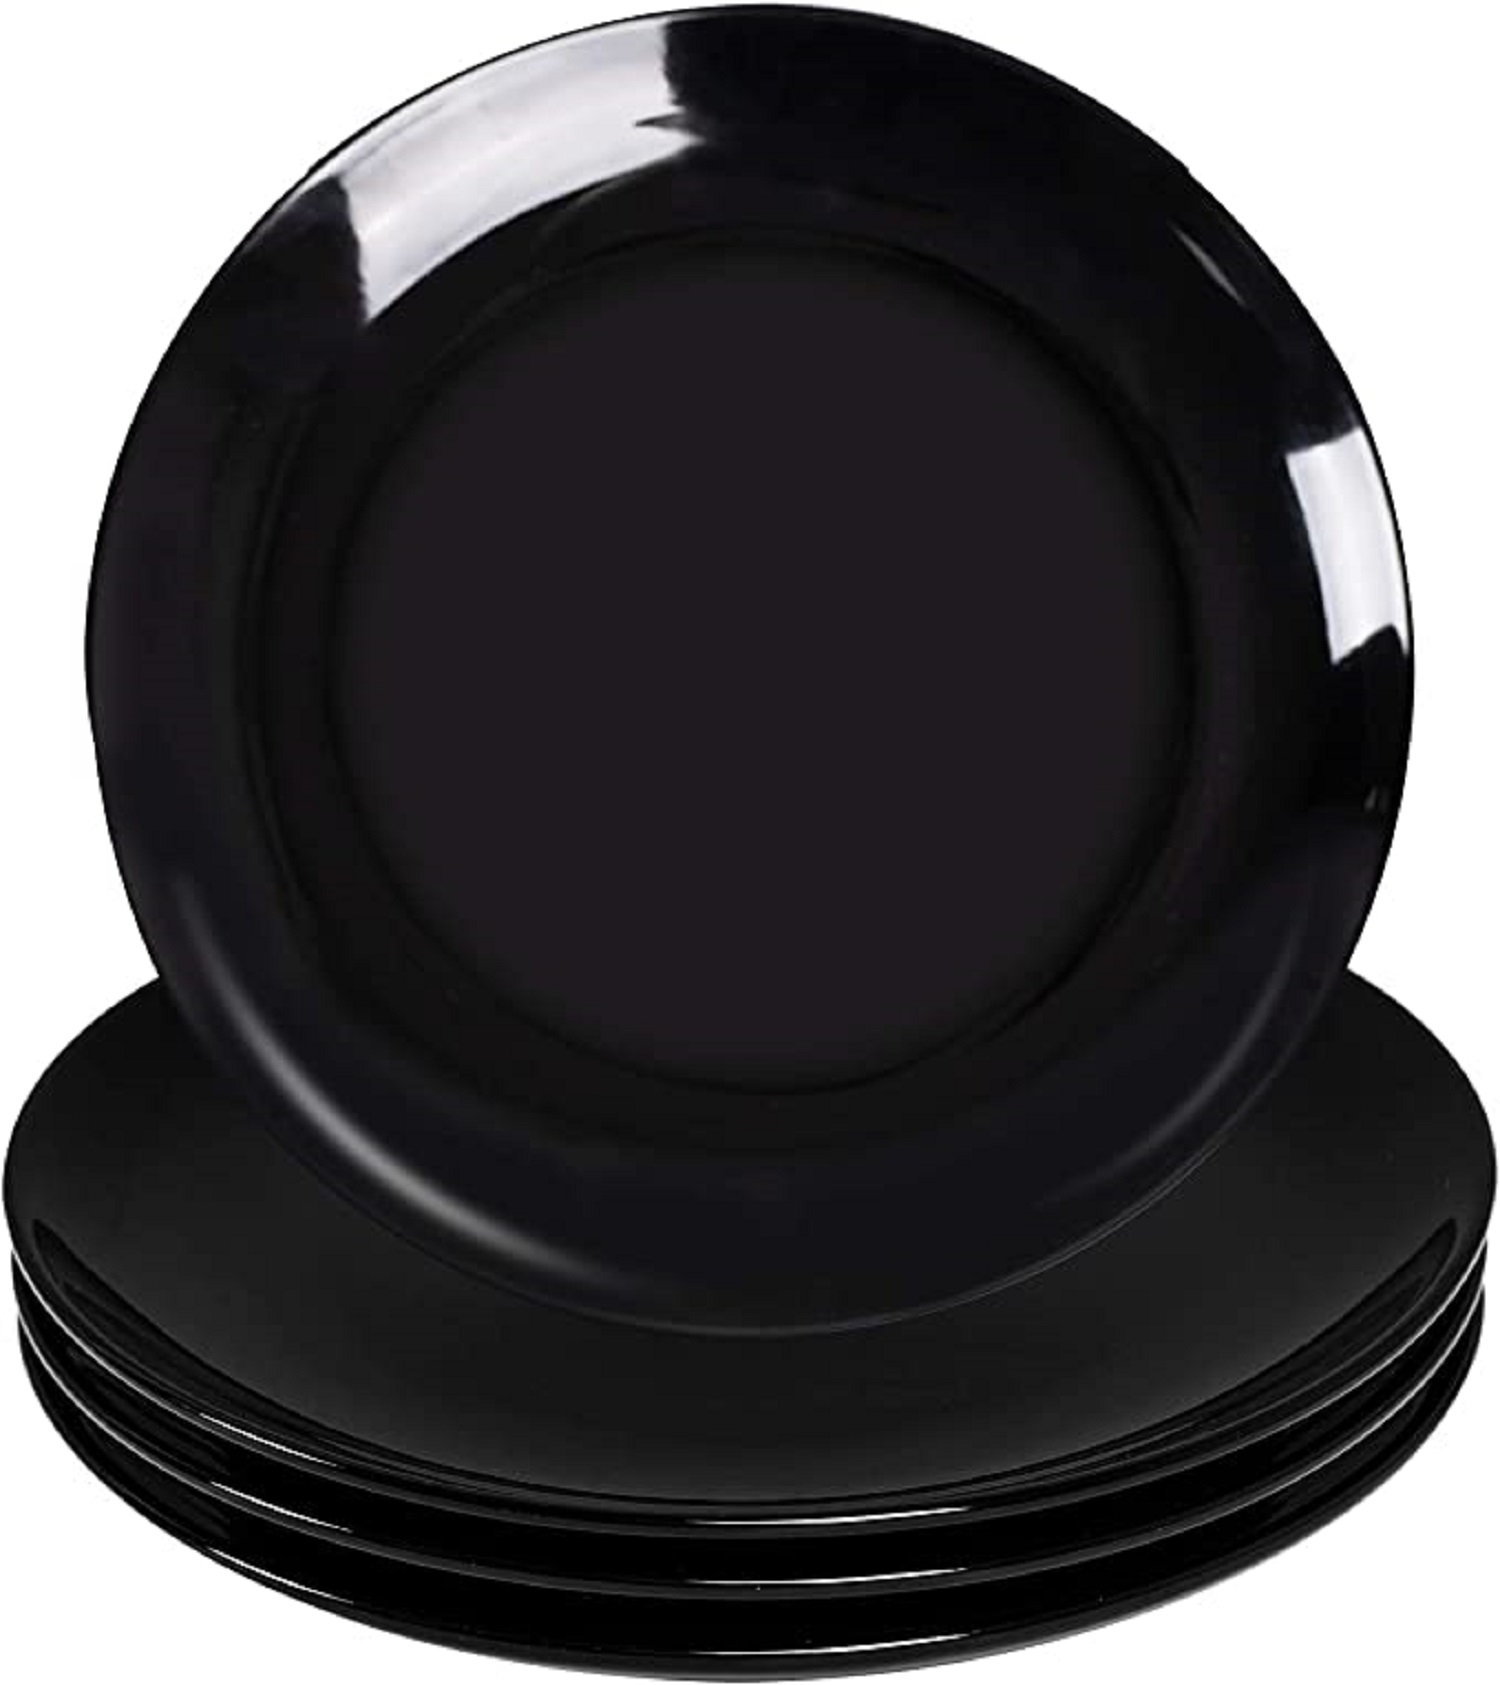 Black Round Microwave Safe Plate